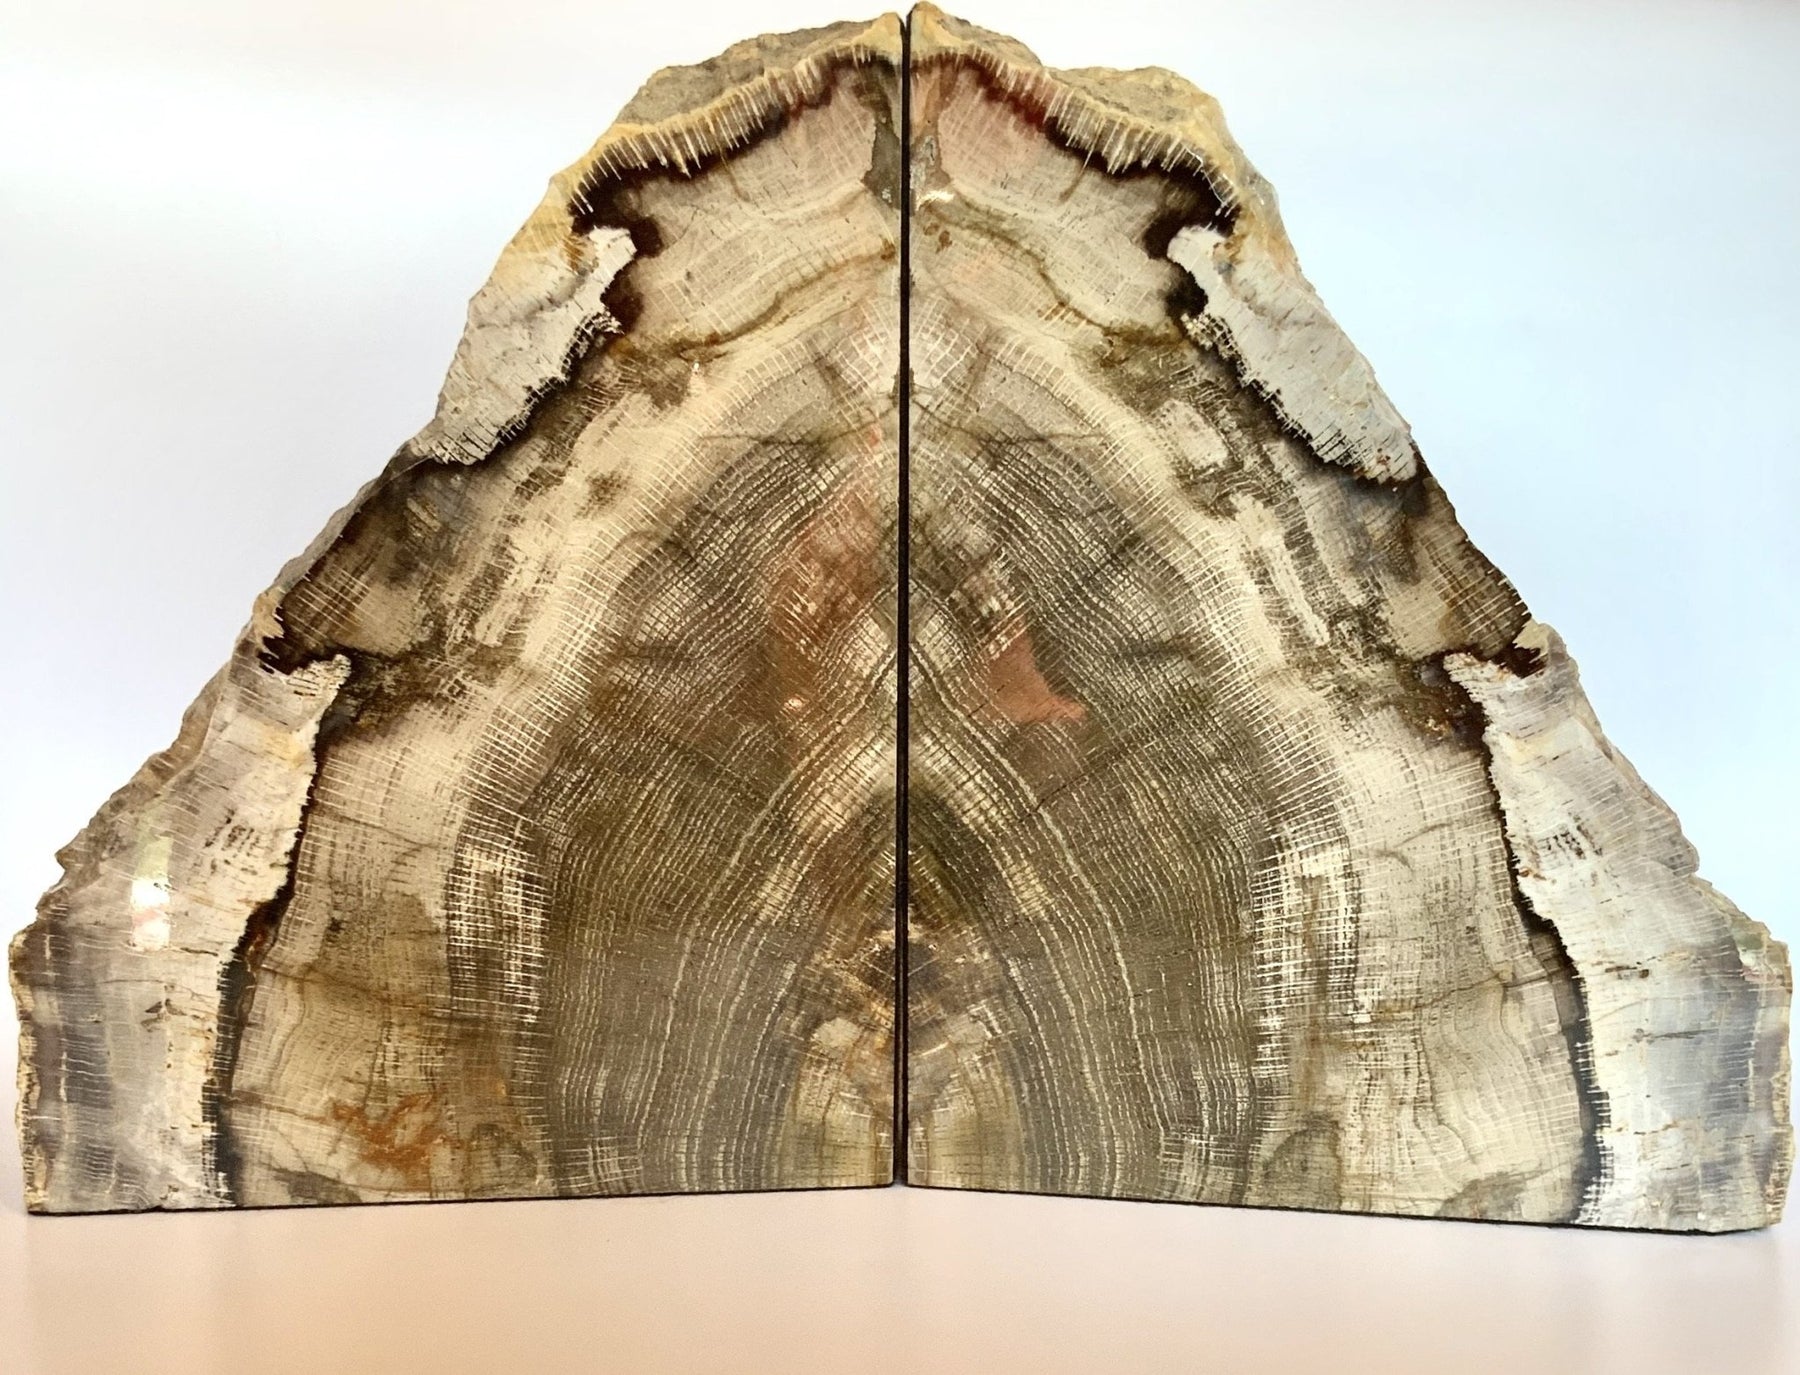 12-14 Petrified Wood Slices - AA Quality